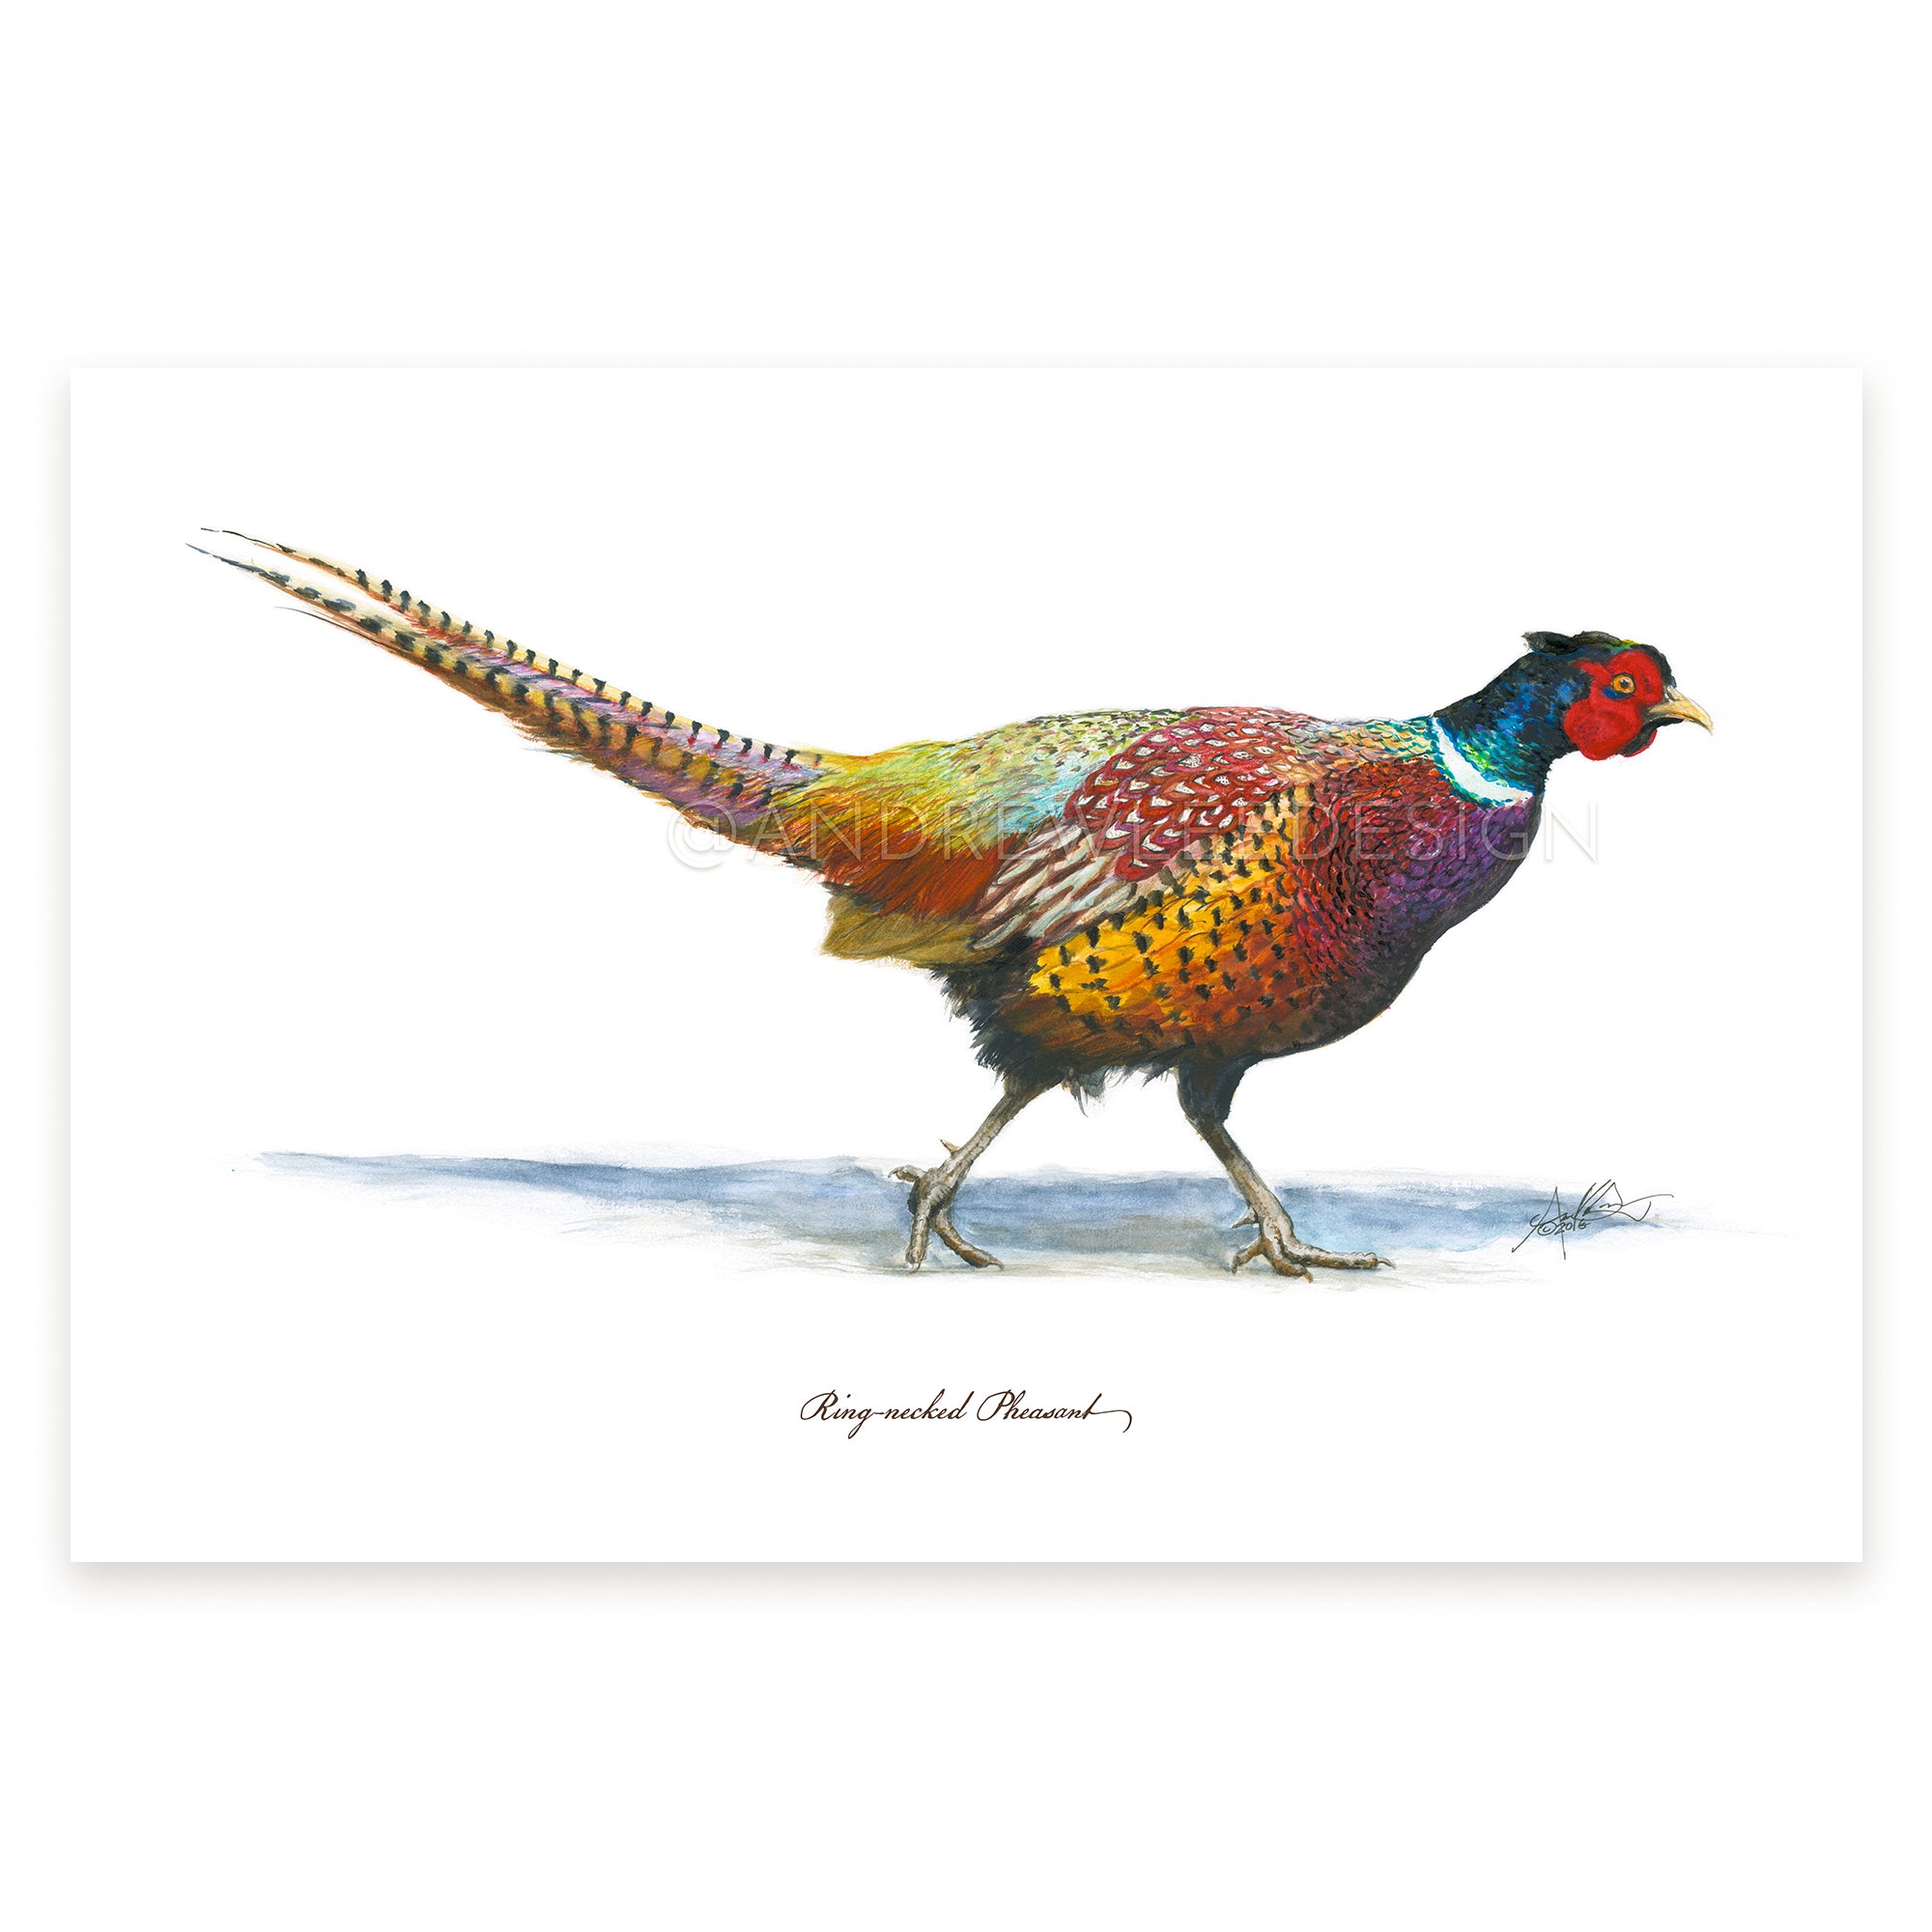 Ring-necked Pheasant, 12x18" Print